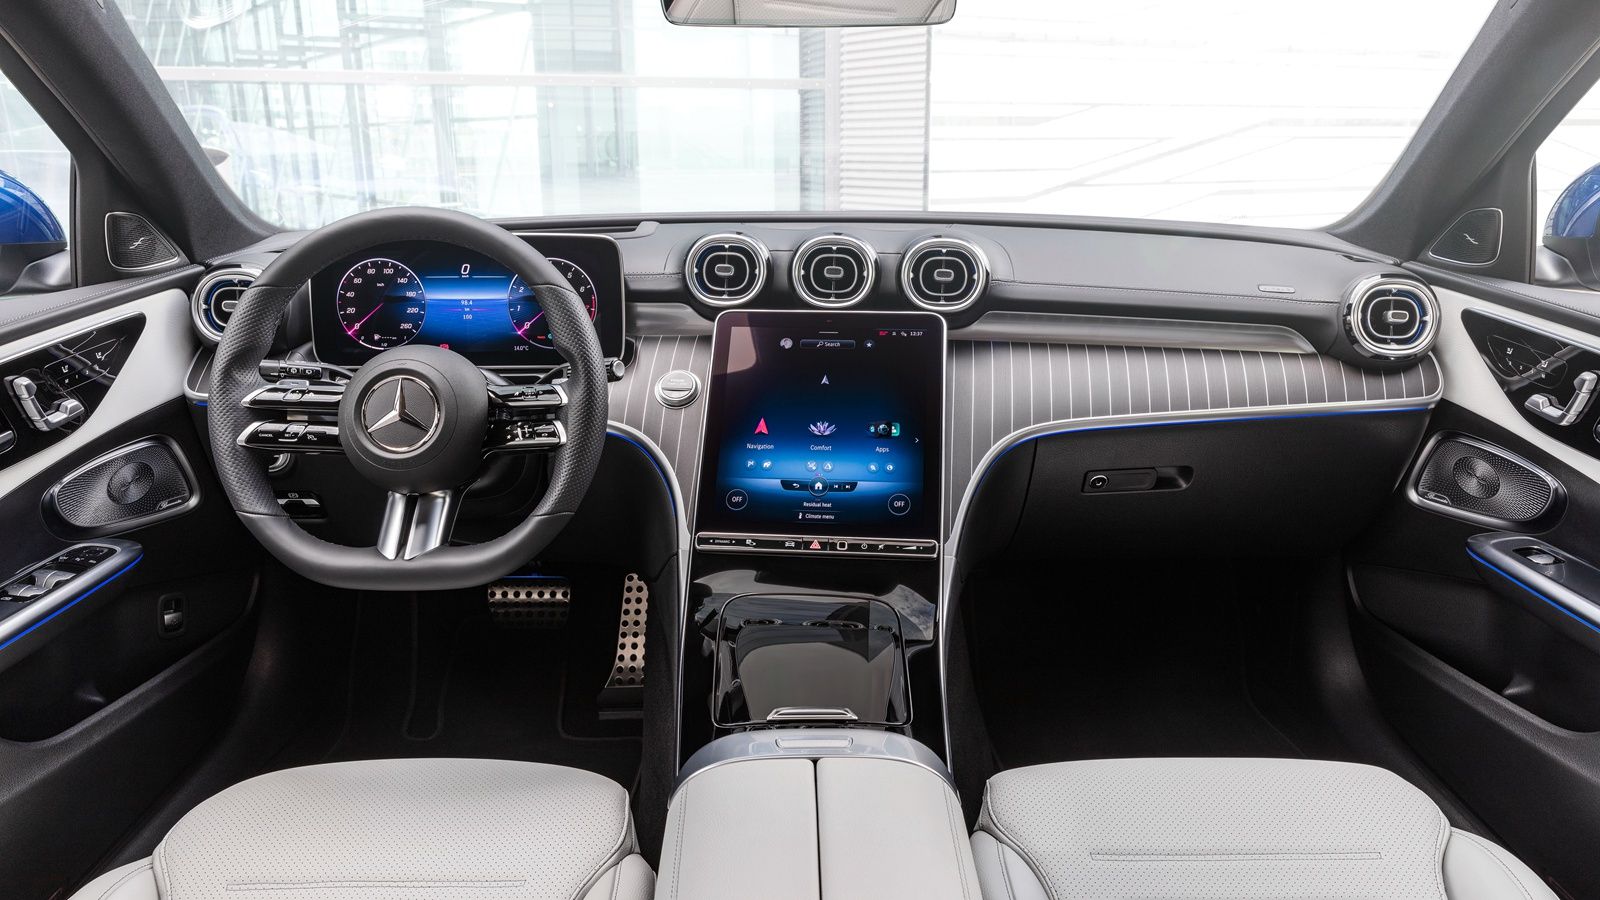 2021 Mercedes-Benz C-Class W206 Upcoming Version Interior 001